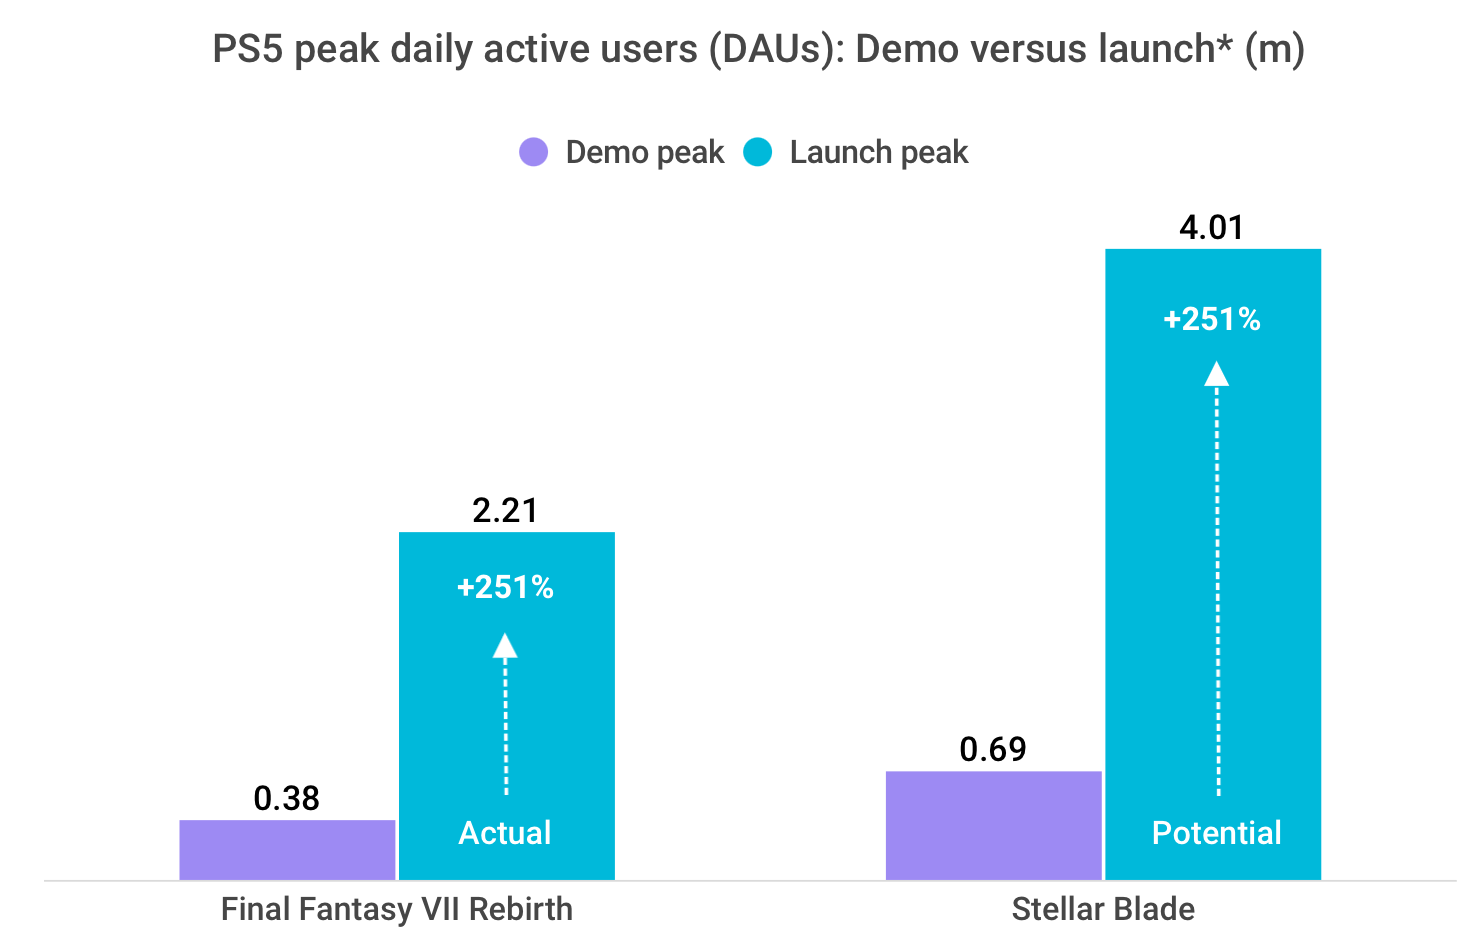 Stellar Blade’s PS5 demo figures rival FFVII’s